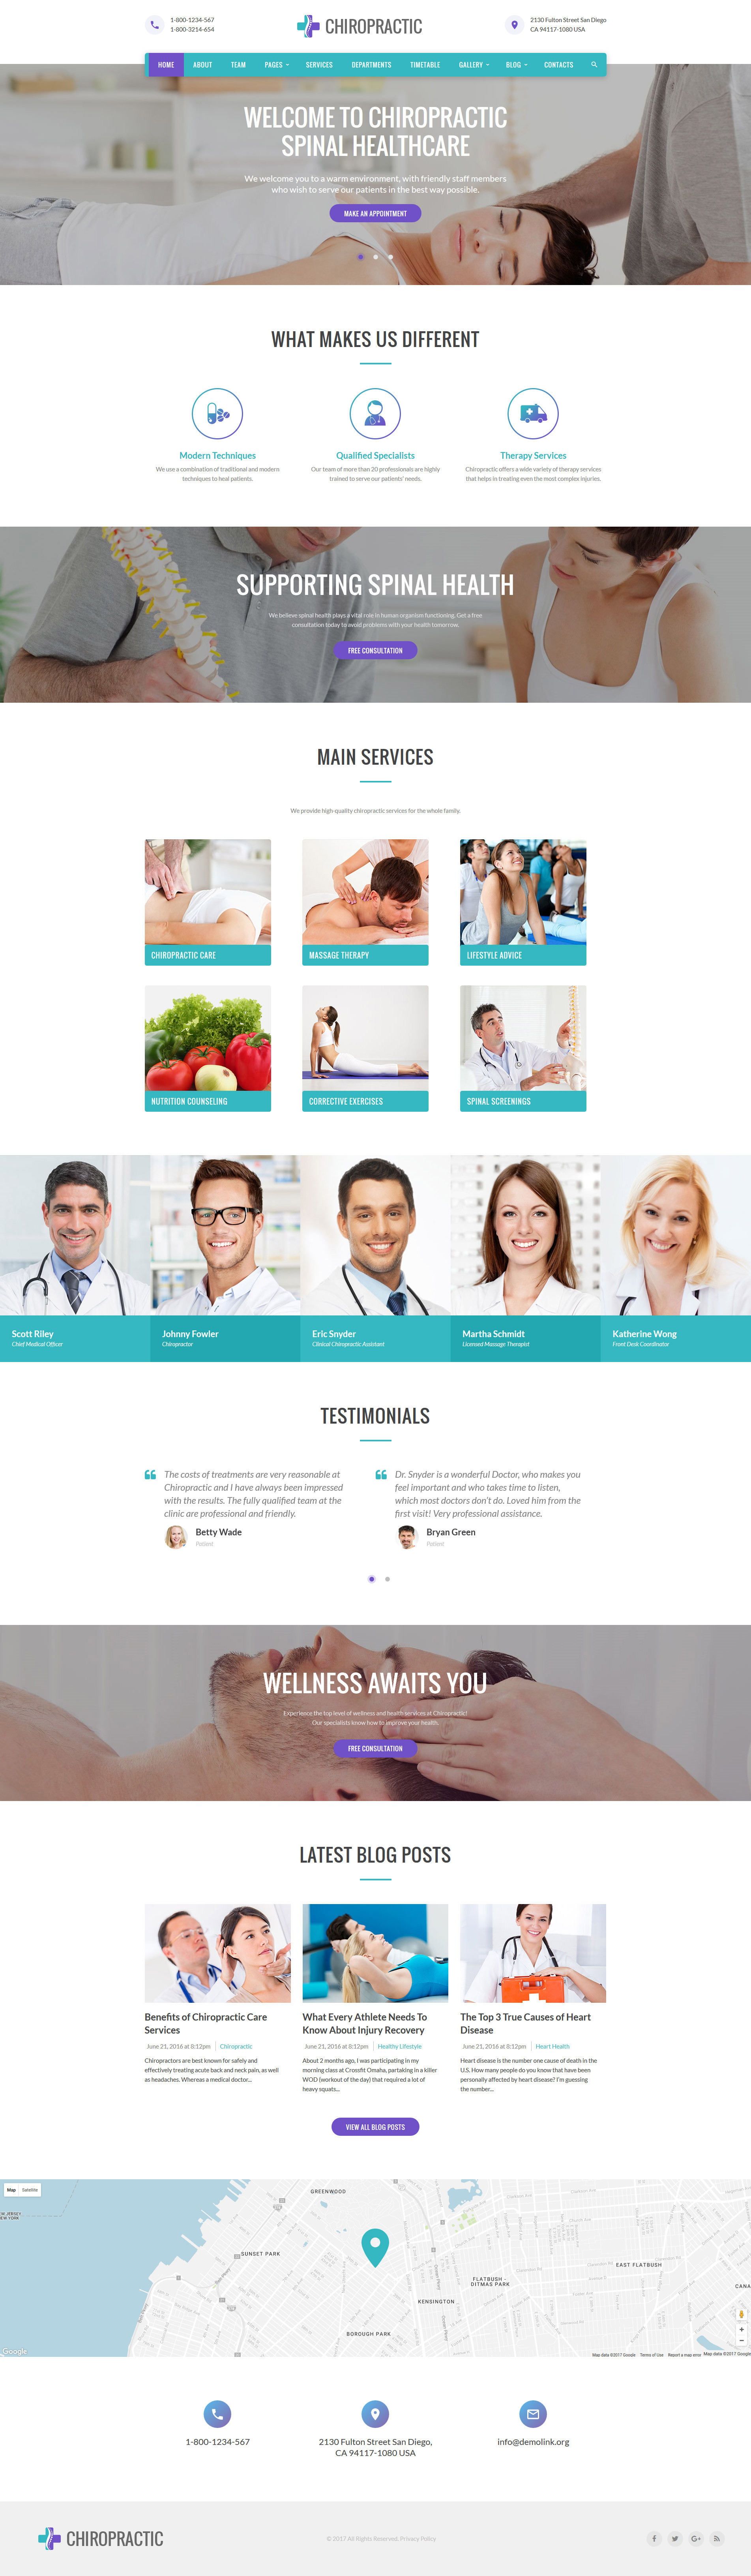 Chiropractic alternative medicine website template 61218 original